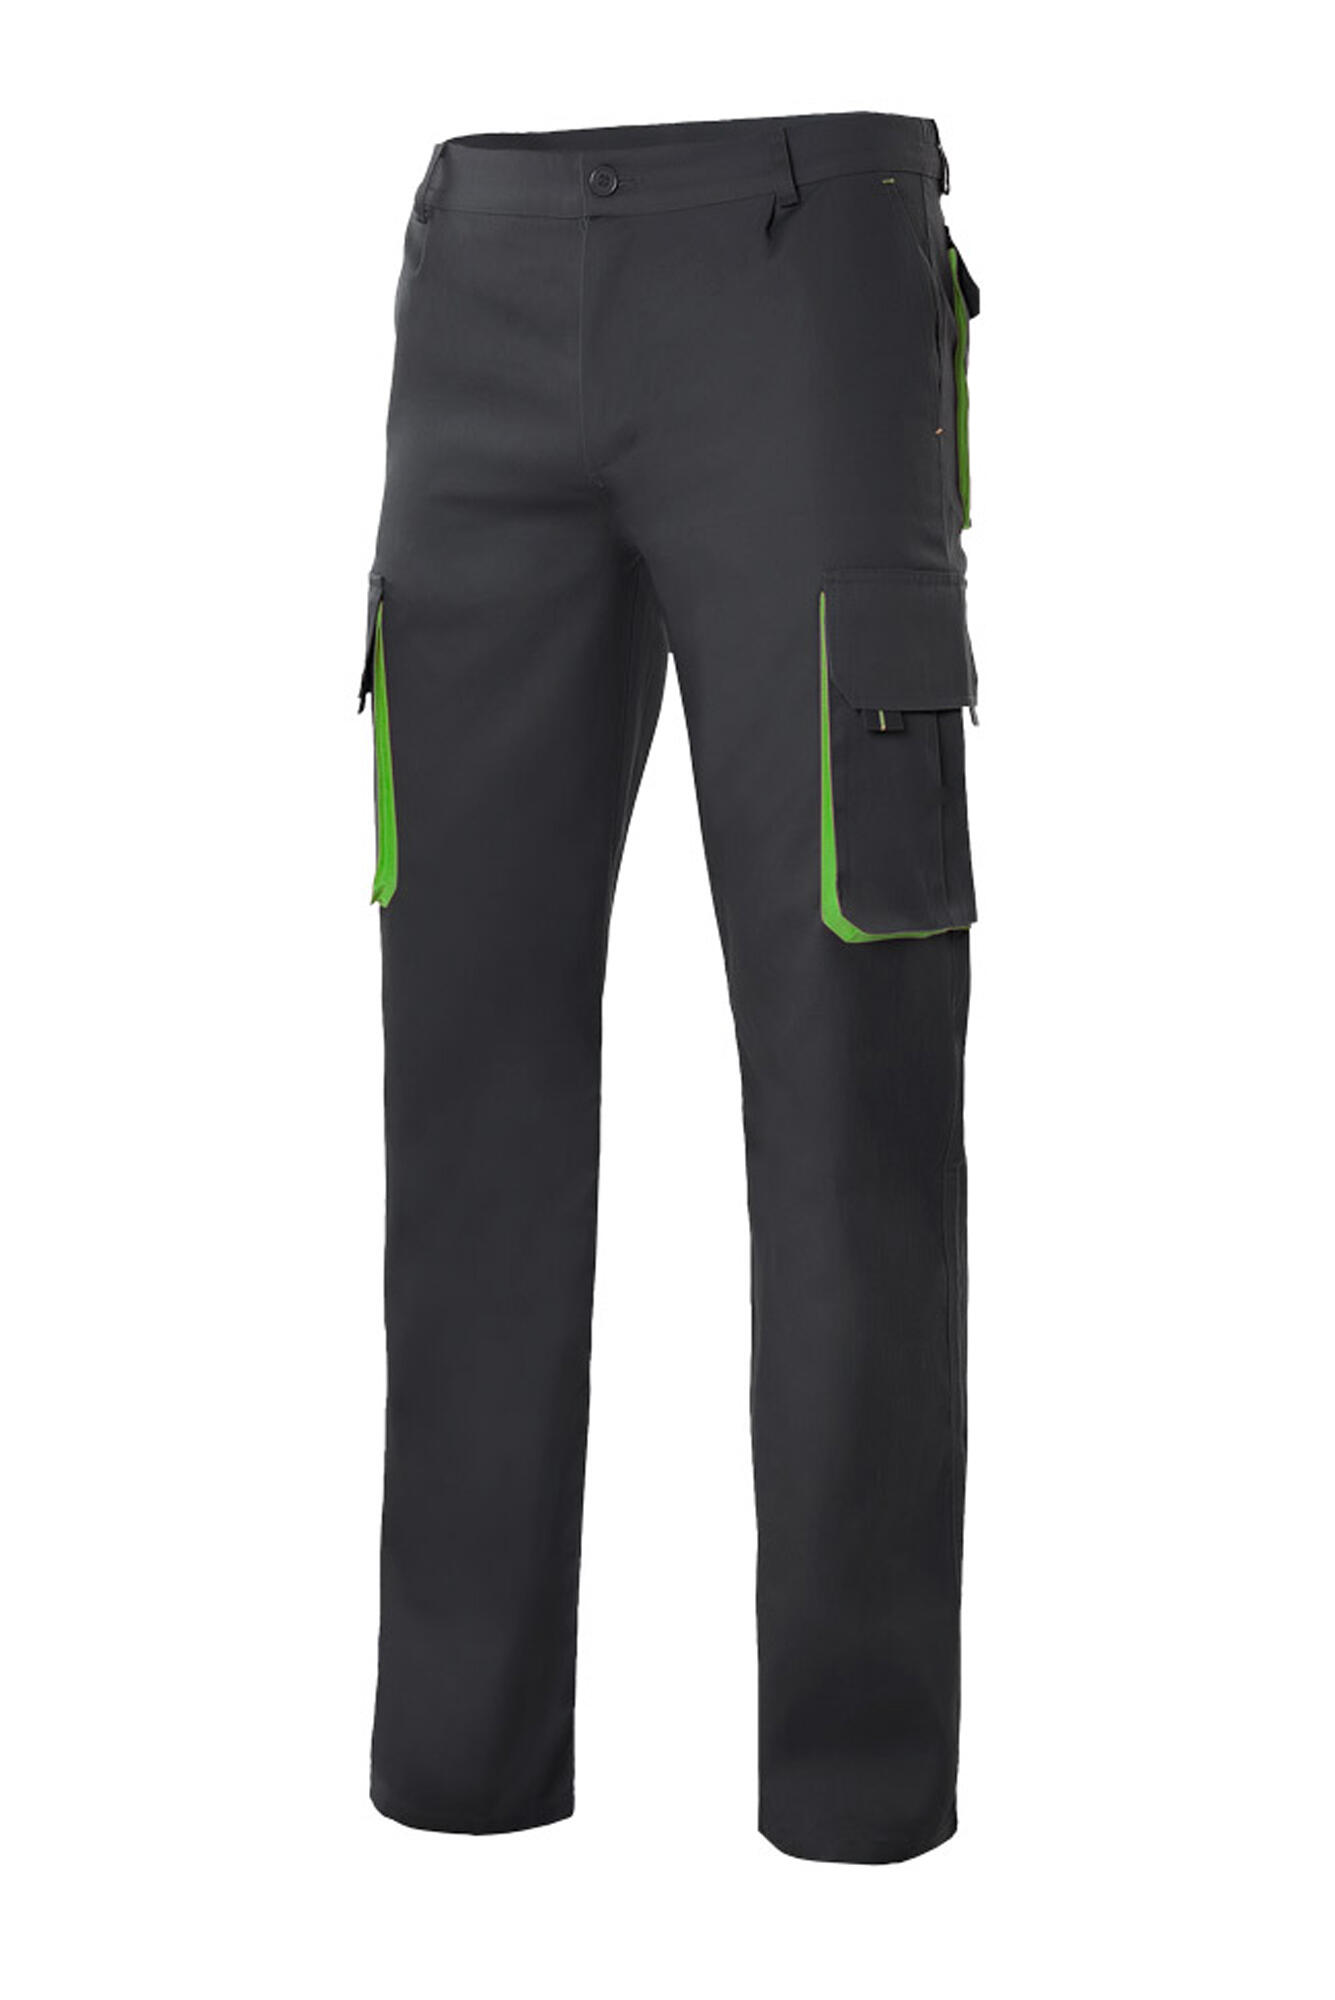 Pantalon de trabajo bicolor multibol negr/verdelima t50